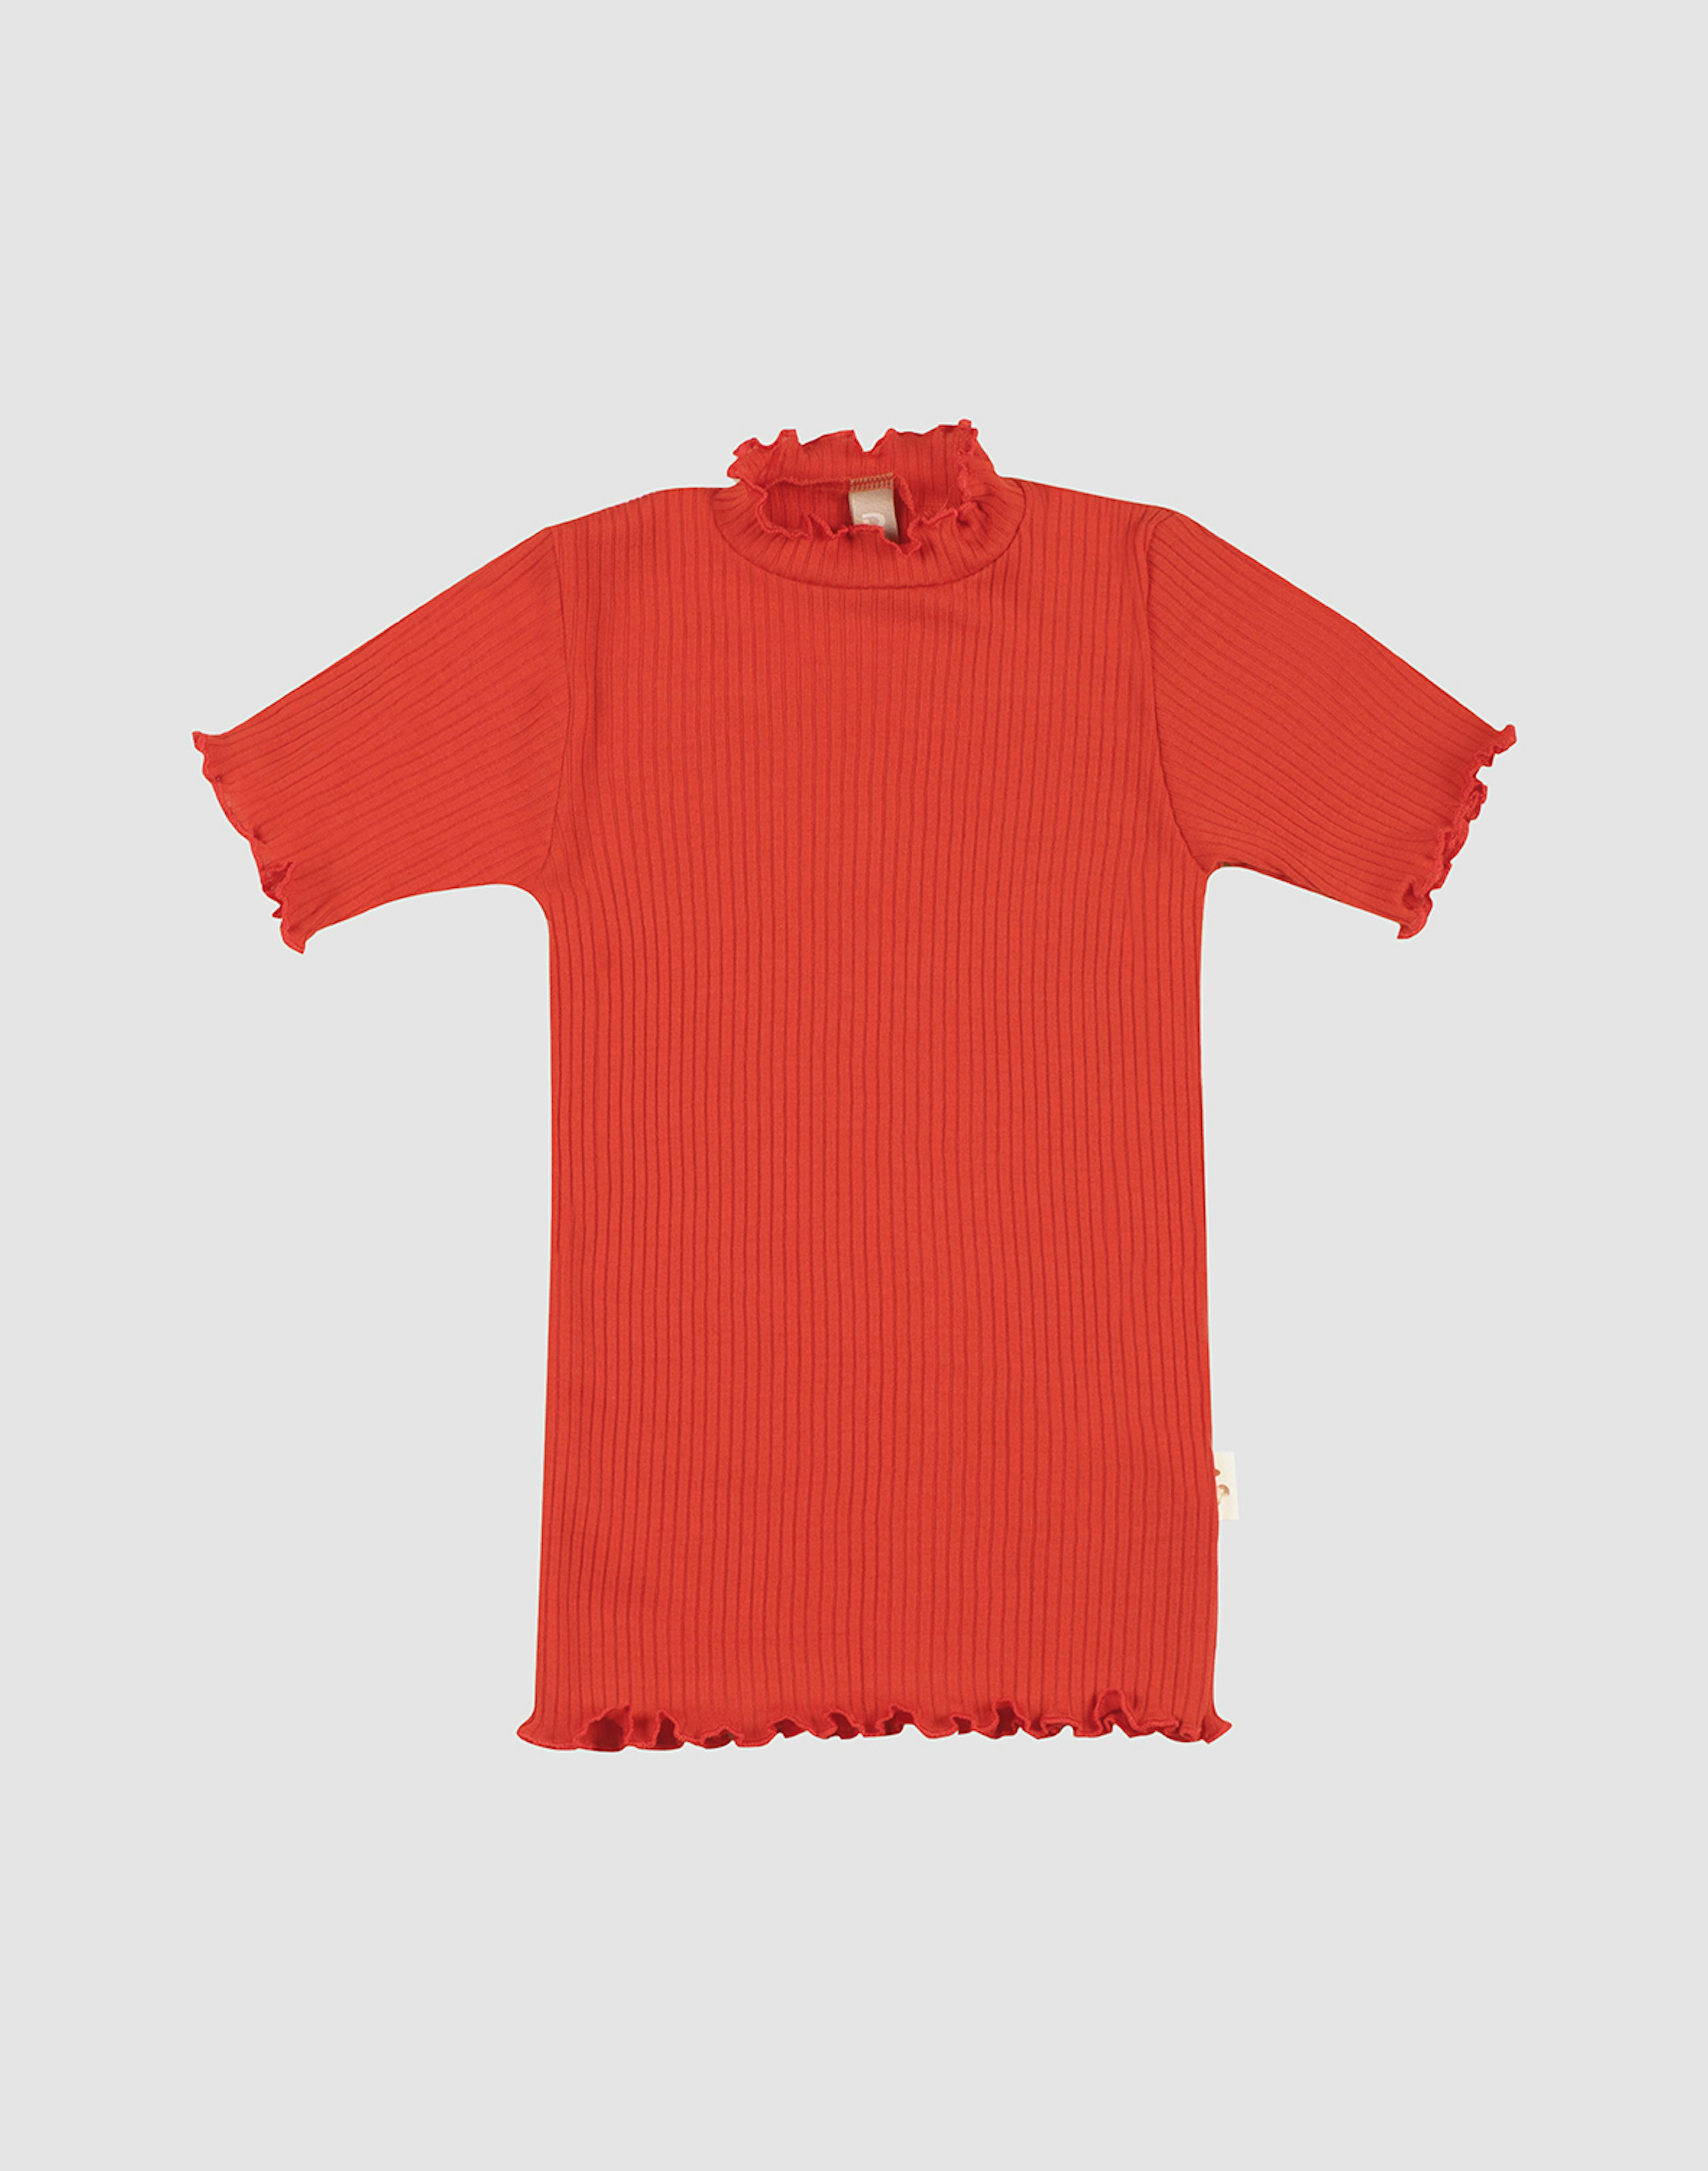 Kinder T-Shirt mit aus - Dilling - Rand Merinowolle Rot gekräuseltem